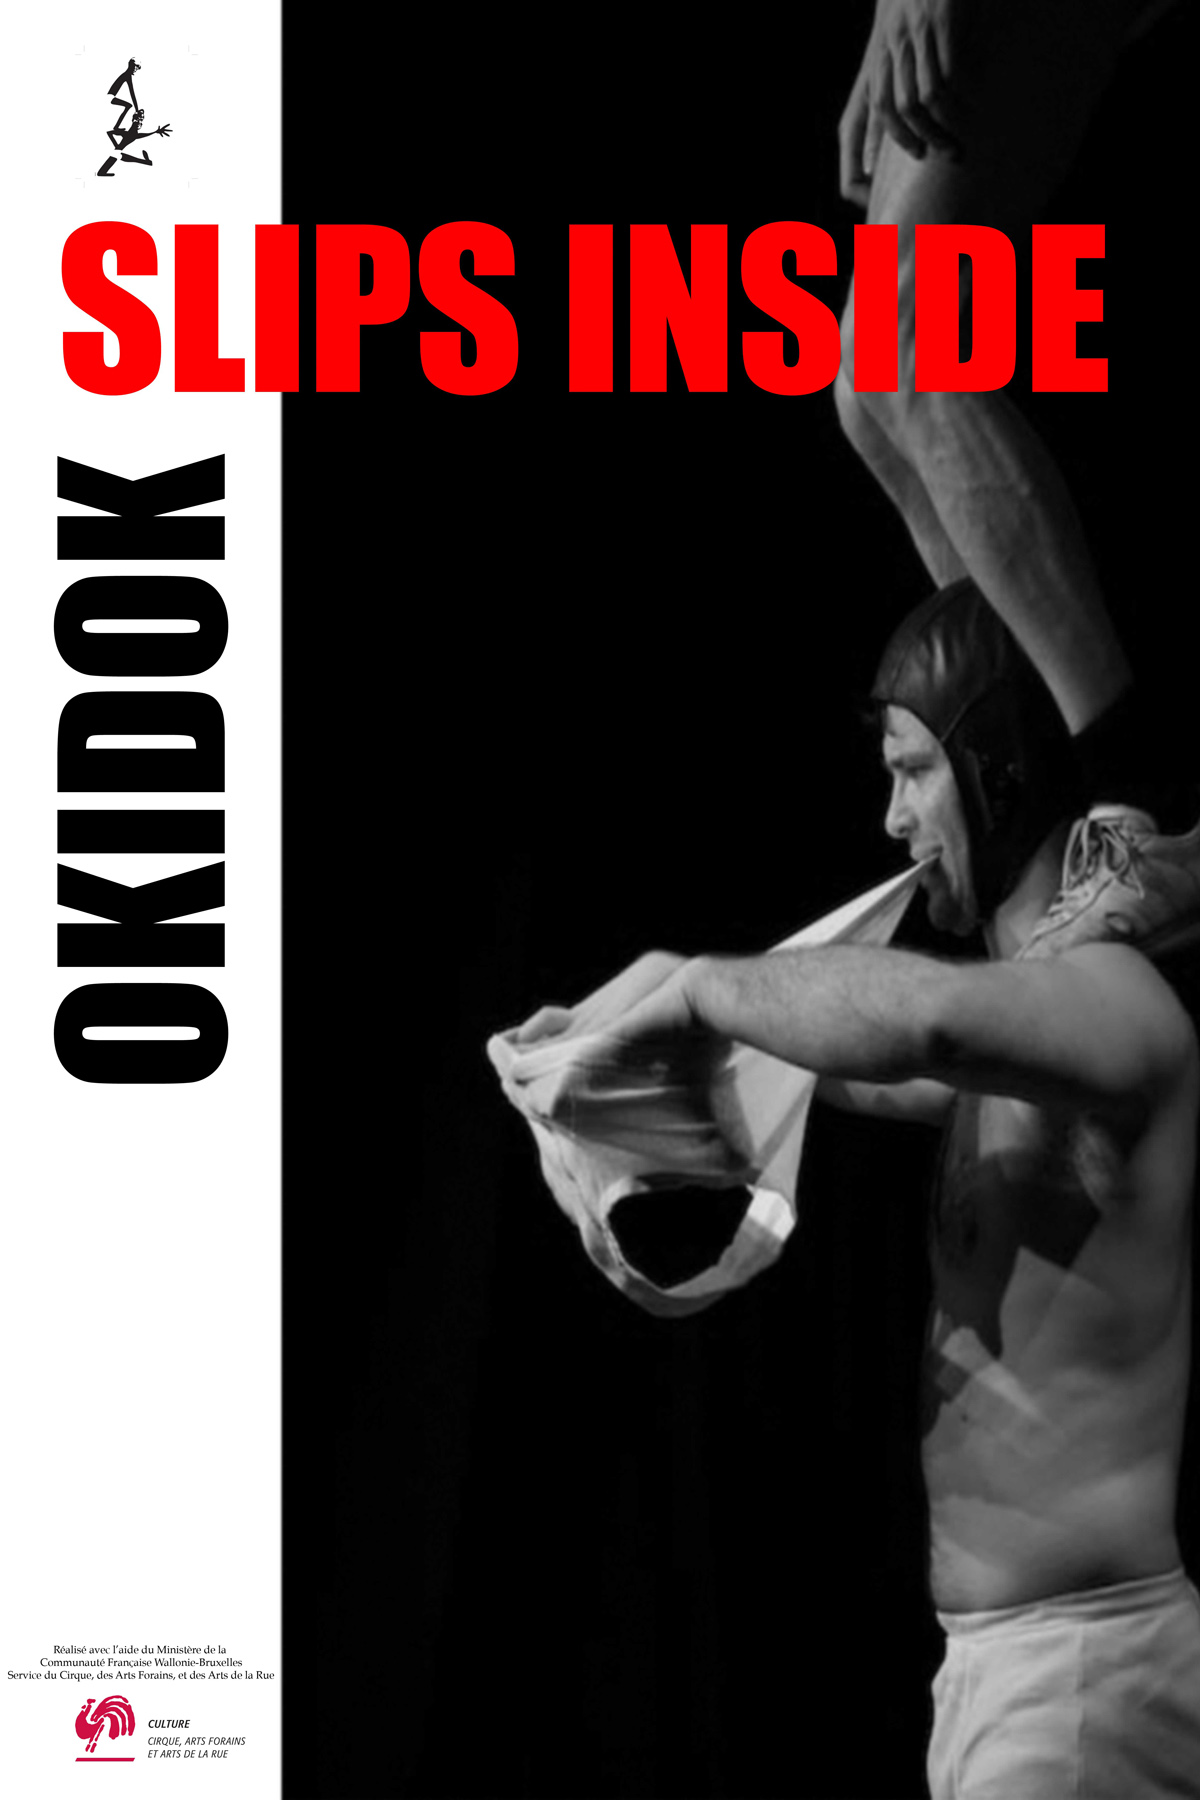 "Slips Inside"- O mellor clown en Lugo